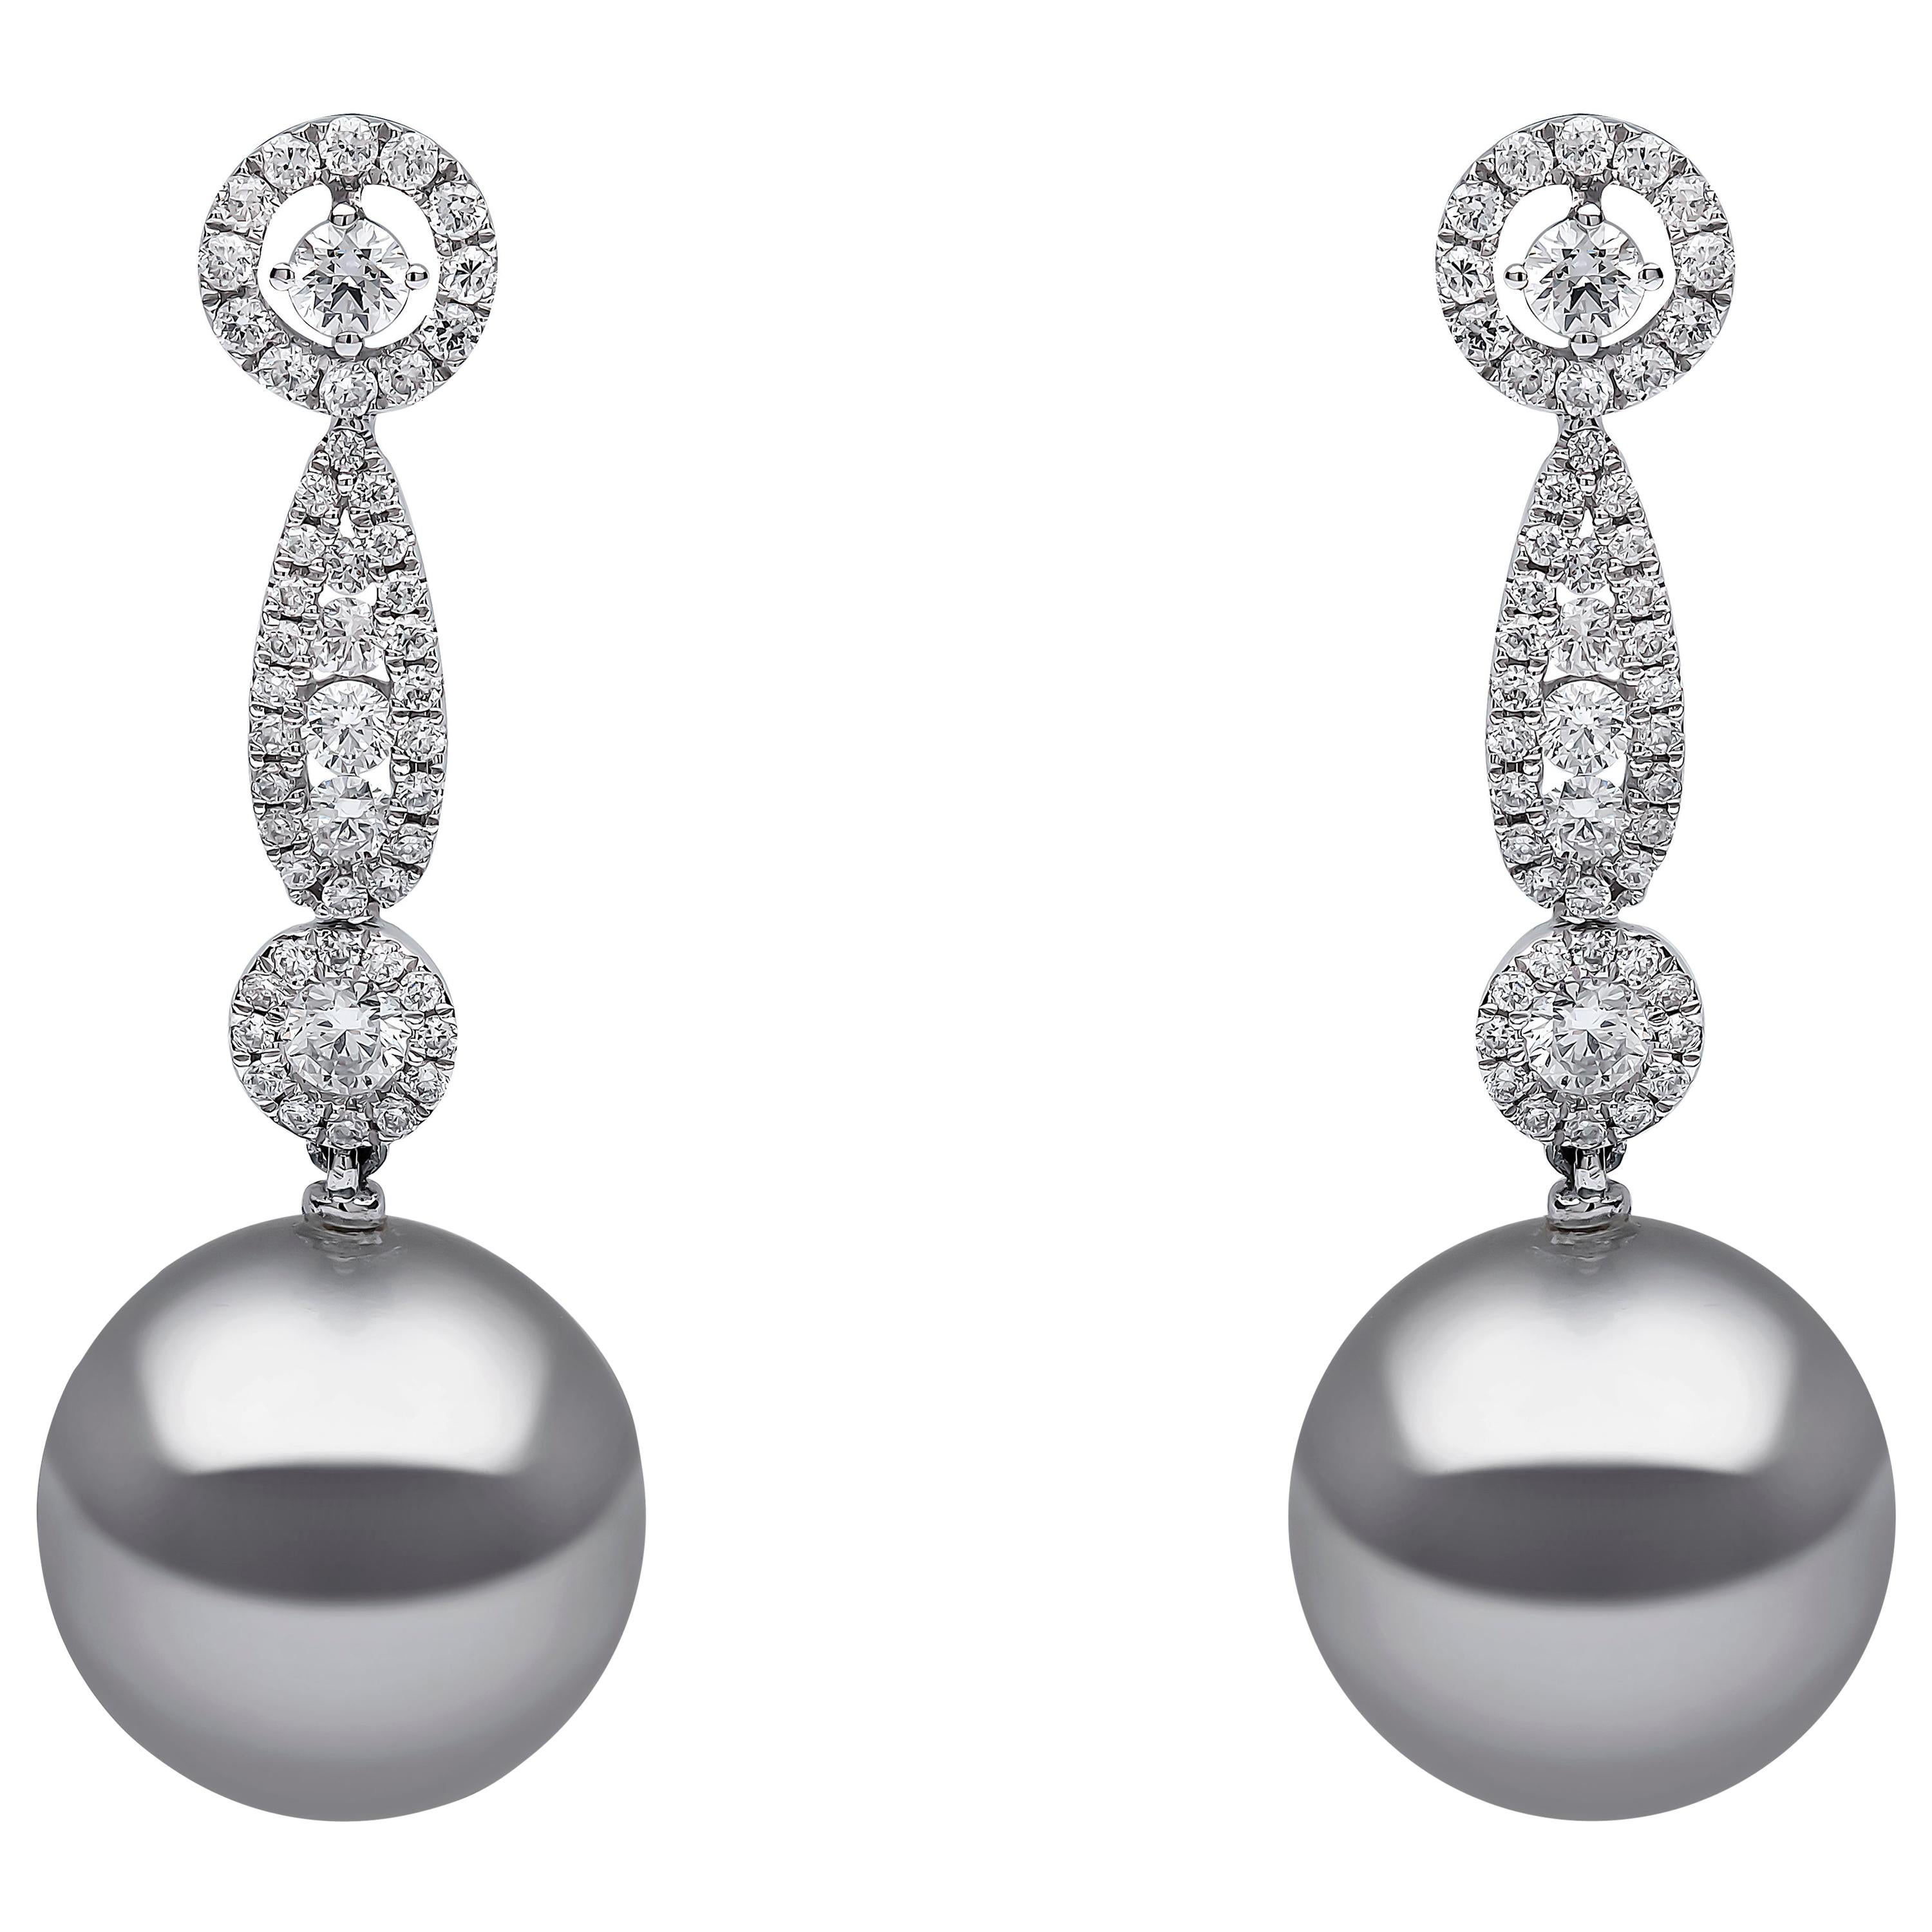 Yoko London Tahitian Pearl and Diamond Earrings in 18 Karat White Gold